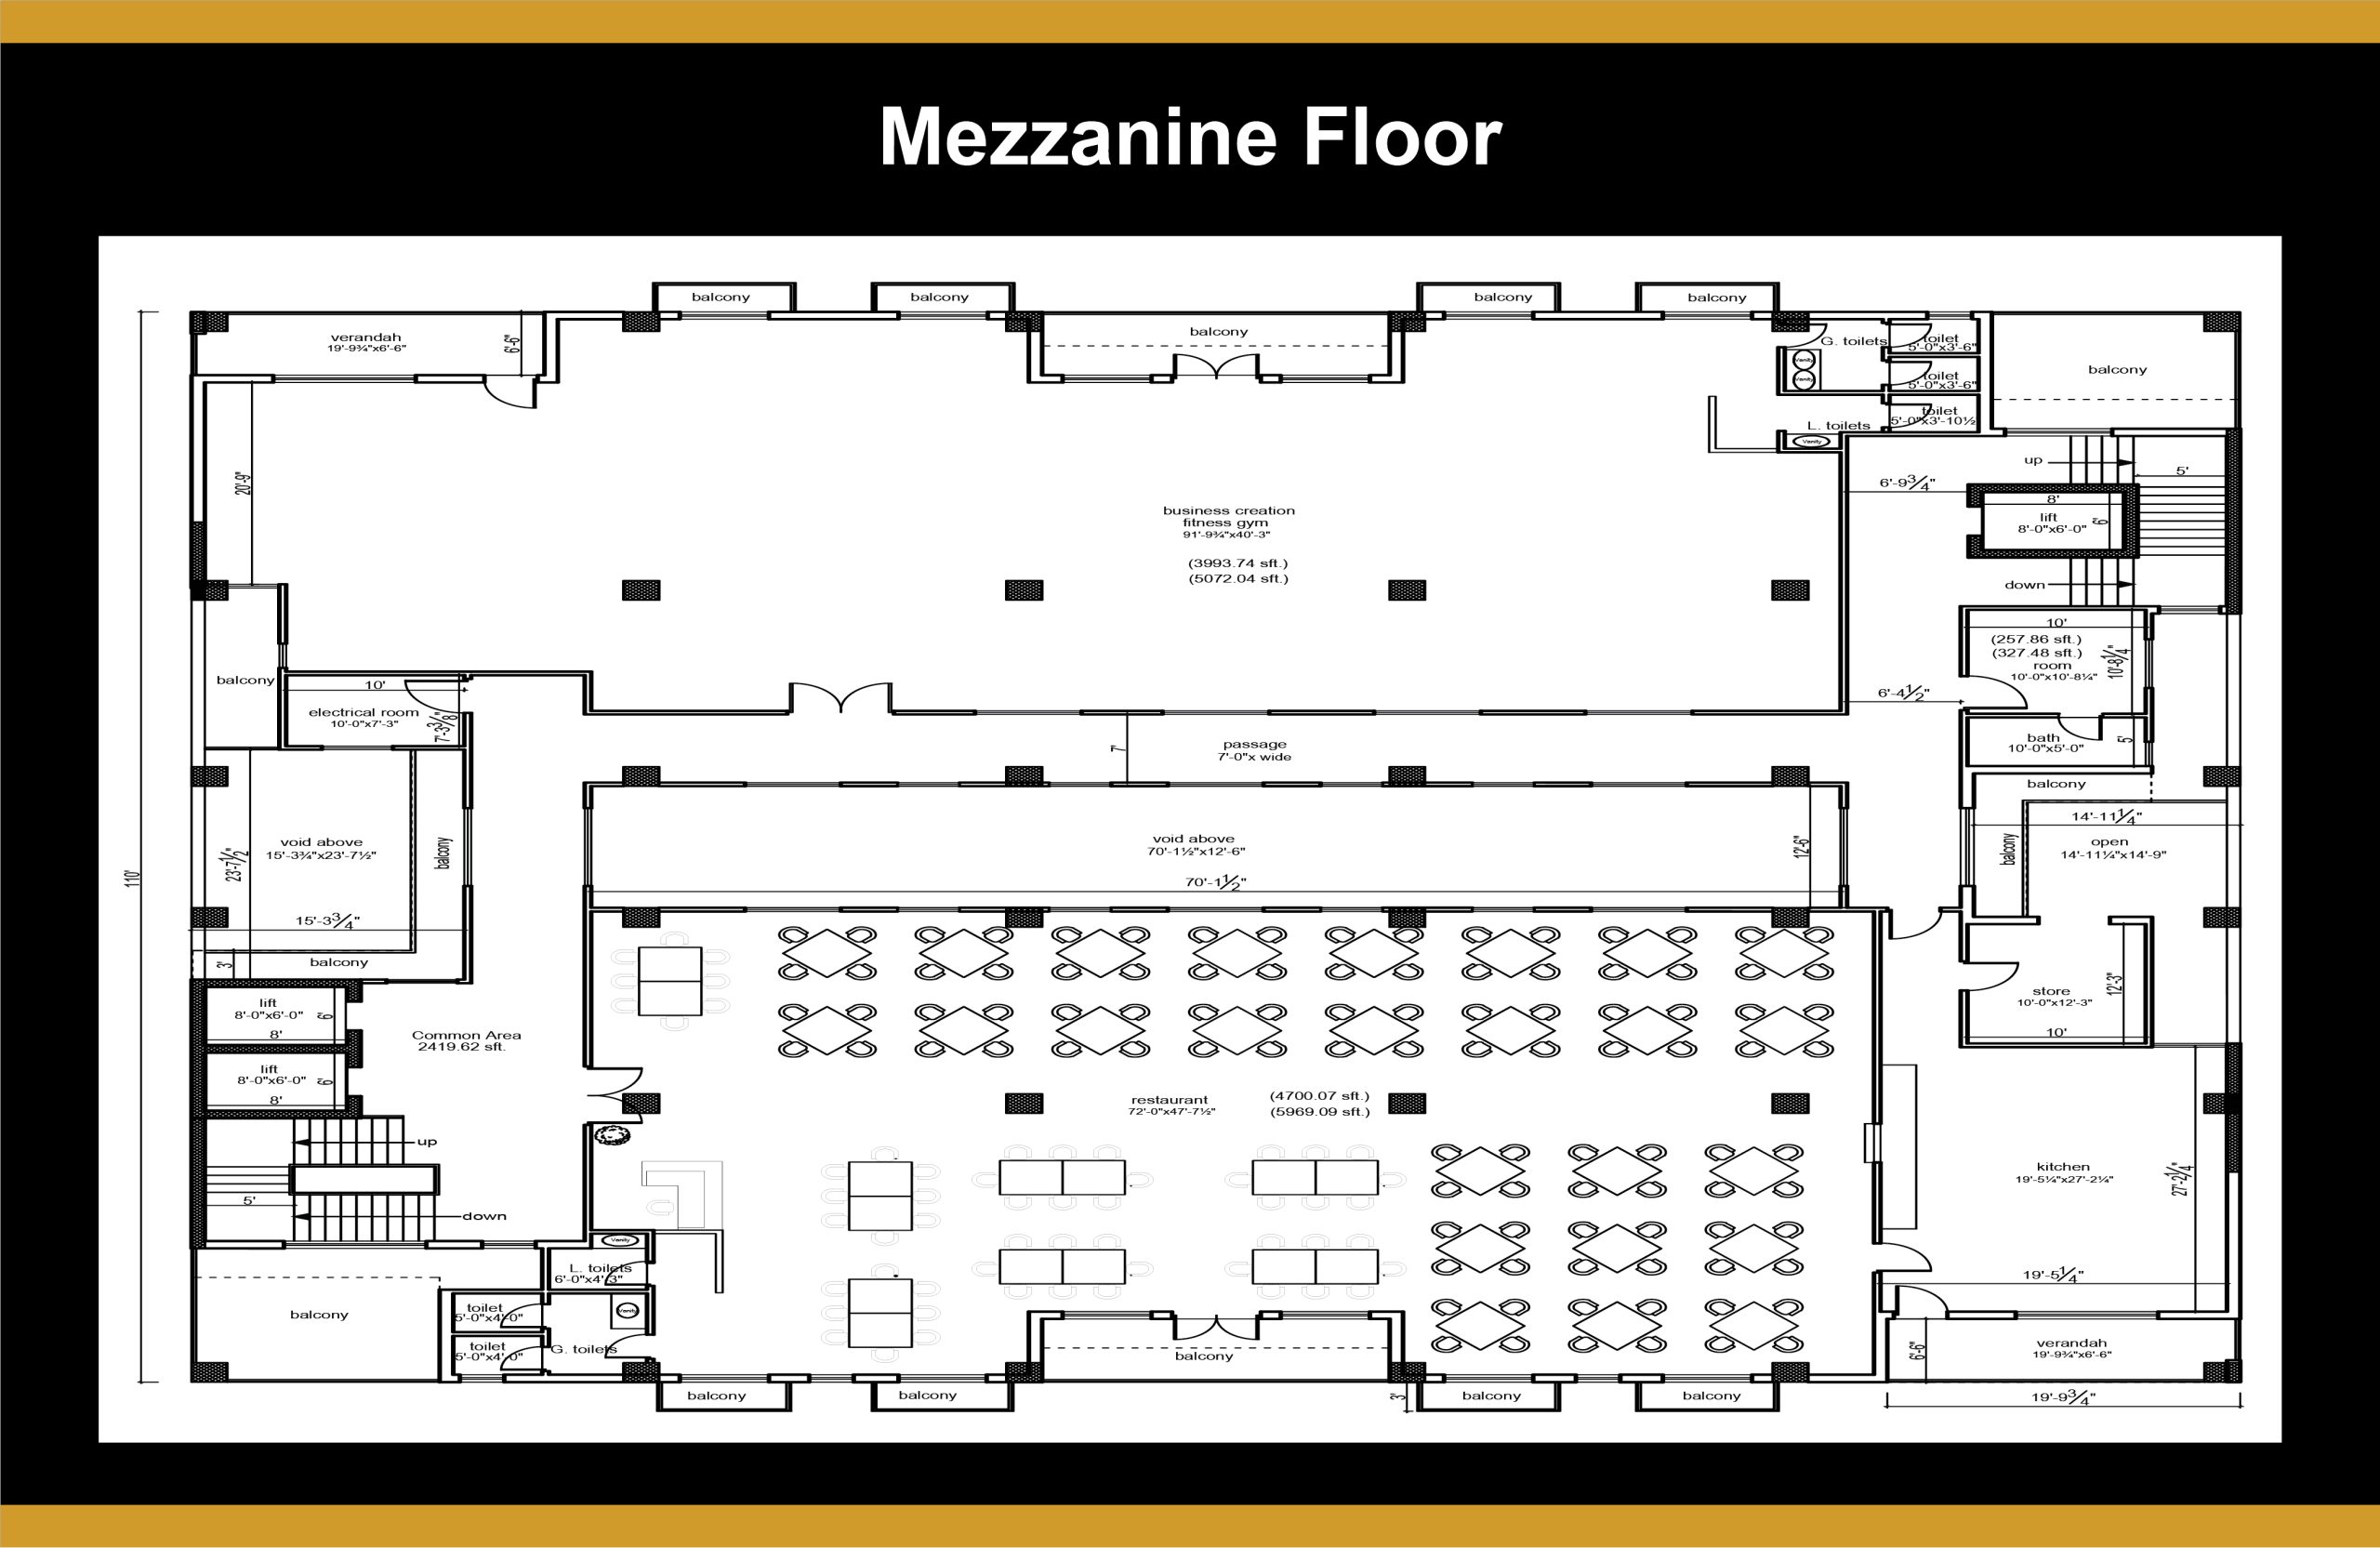 mezzanine floor on hospitality hotel, hospitality hotel islamabad